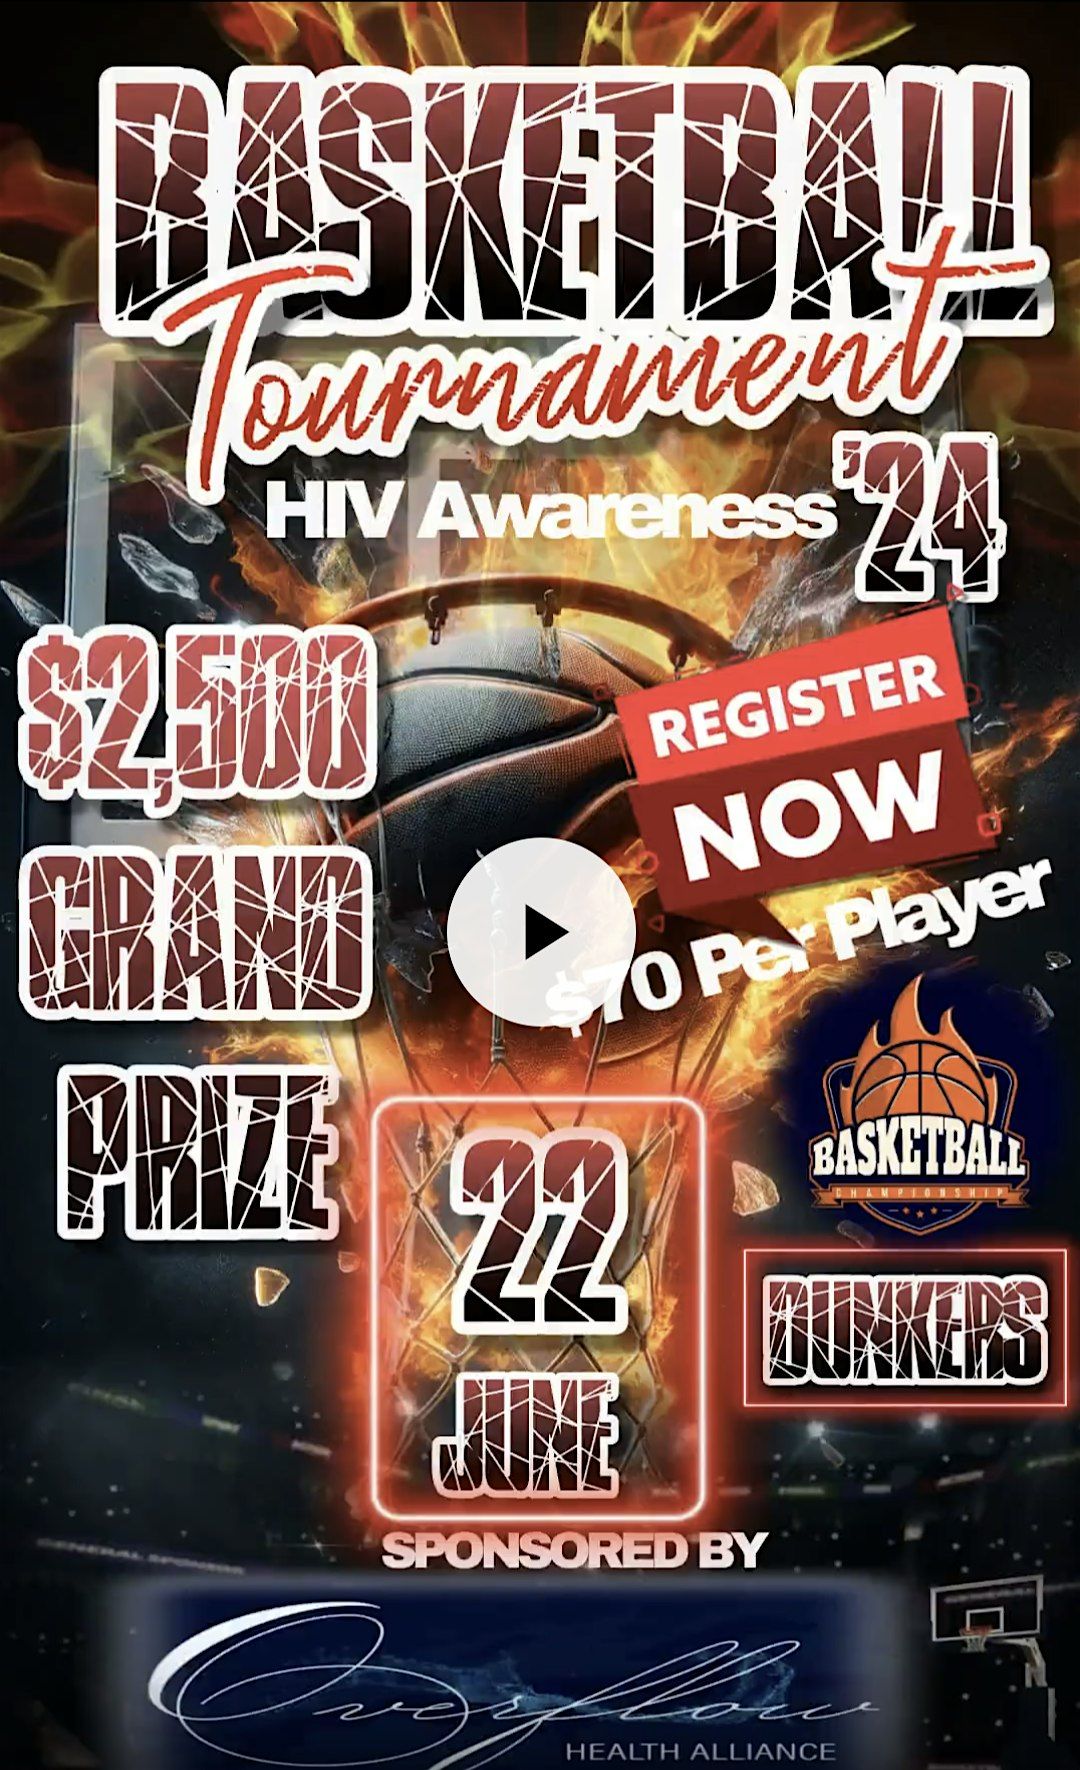 2nd Annual Basketball Tournament for HIV Awareness